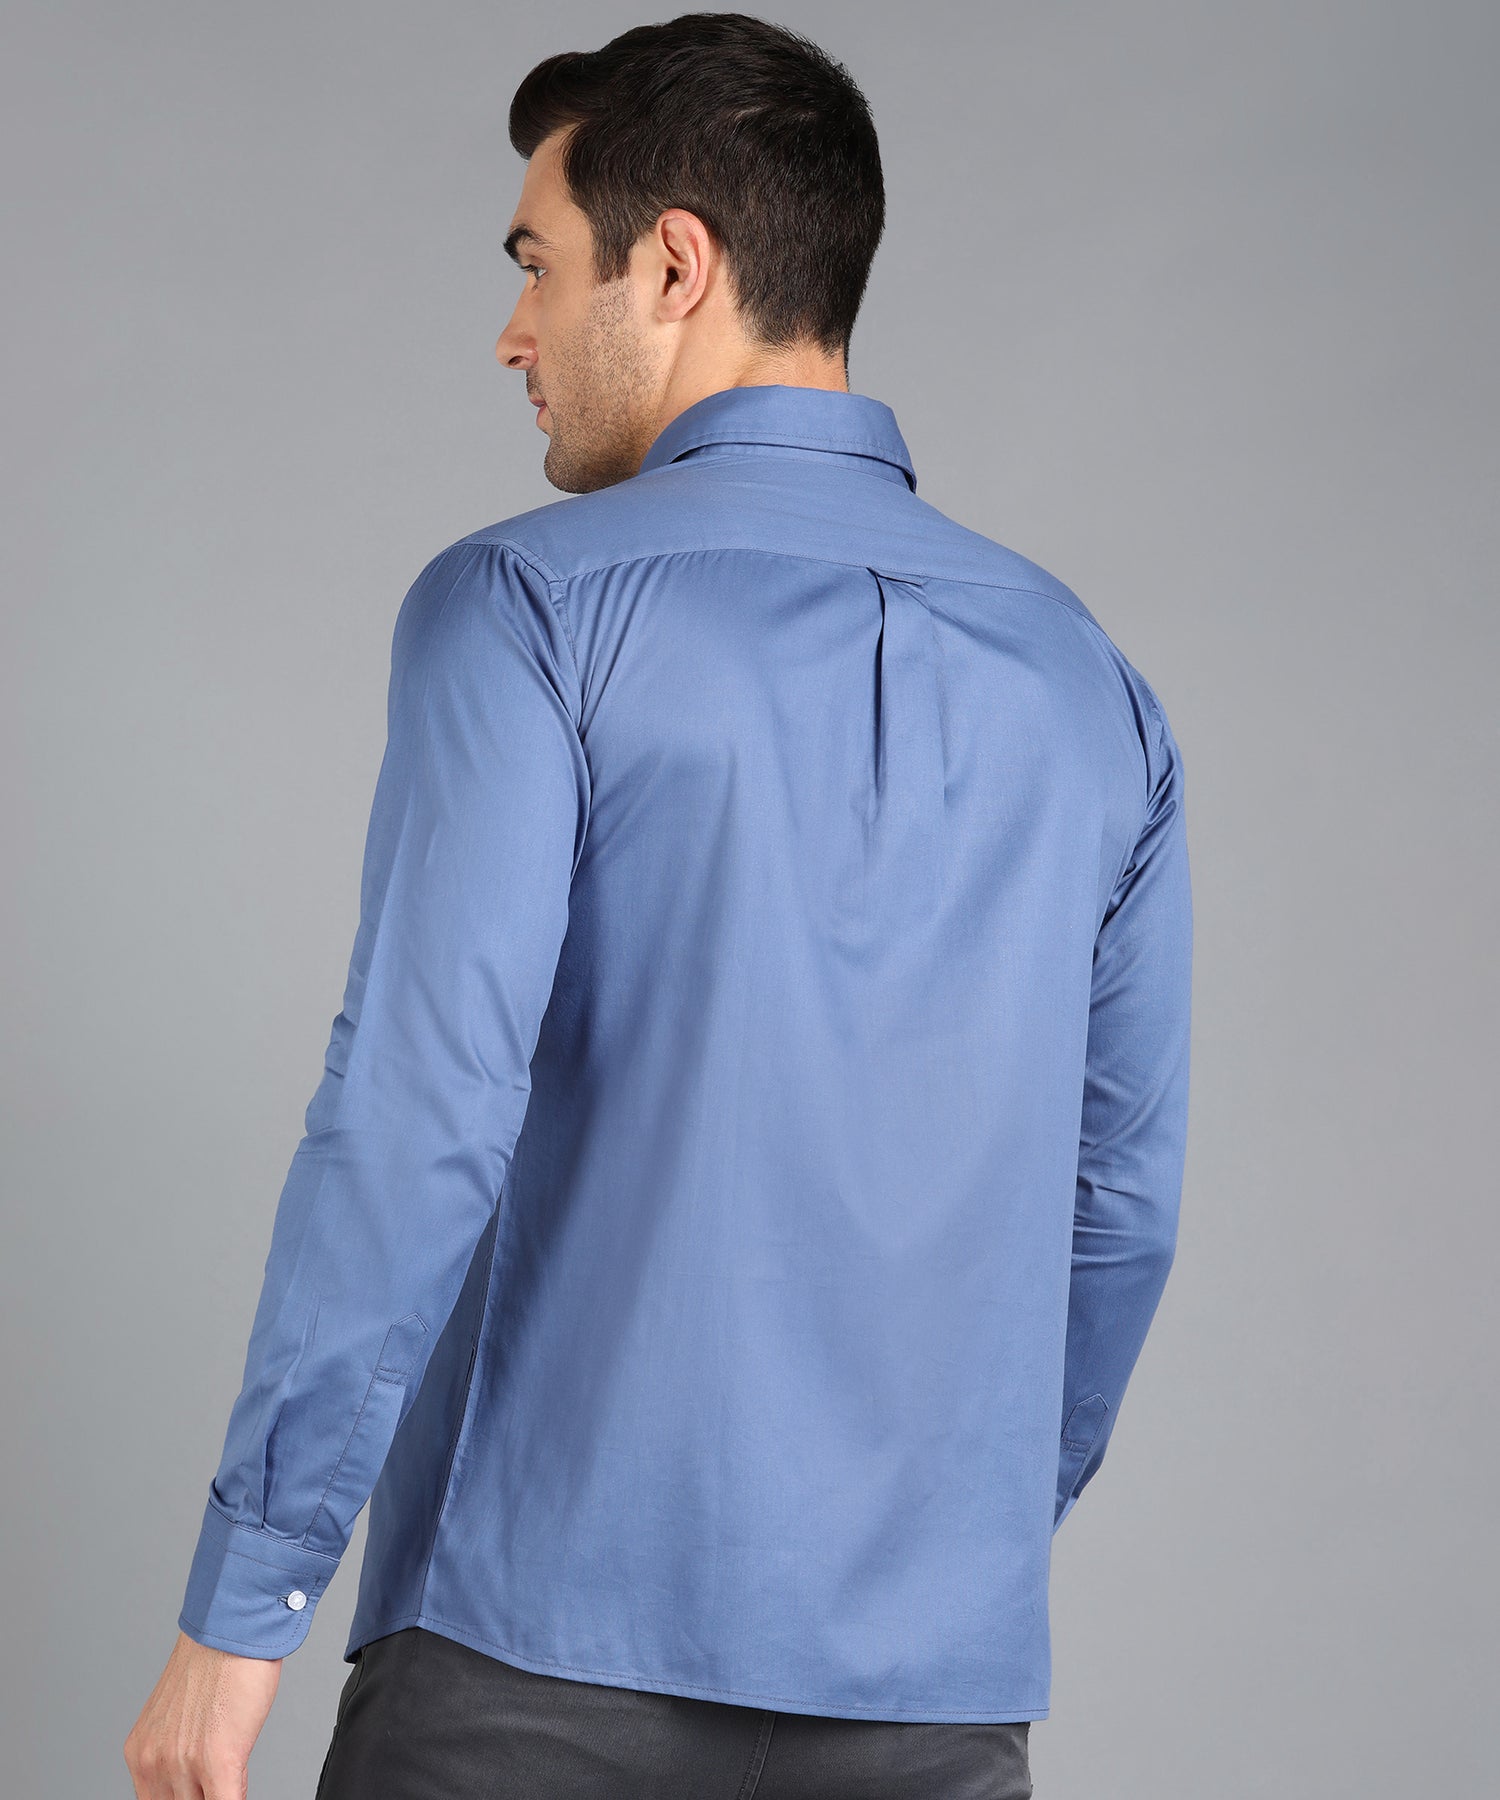 Solid Blue Slim Fit Shirt